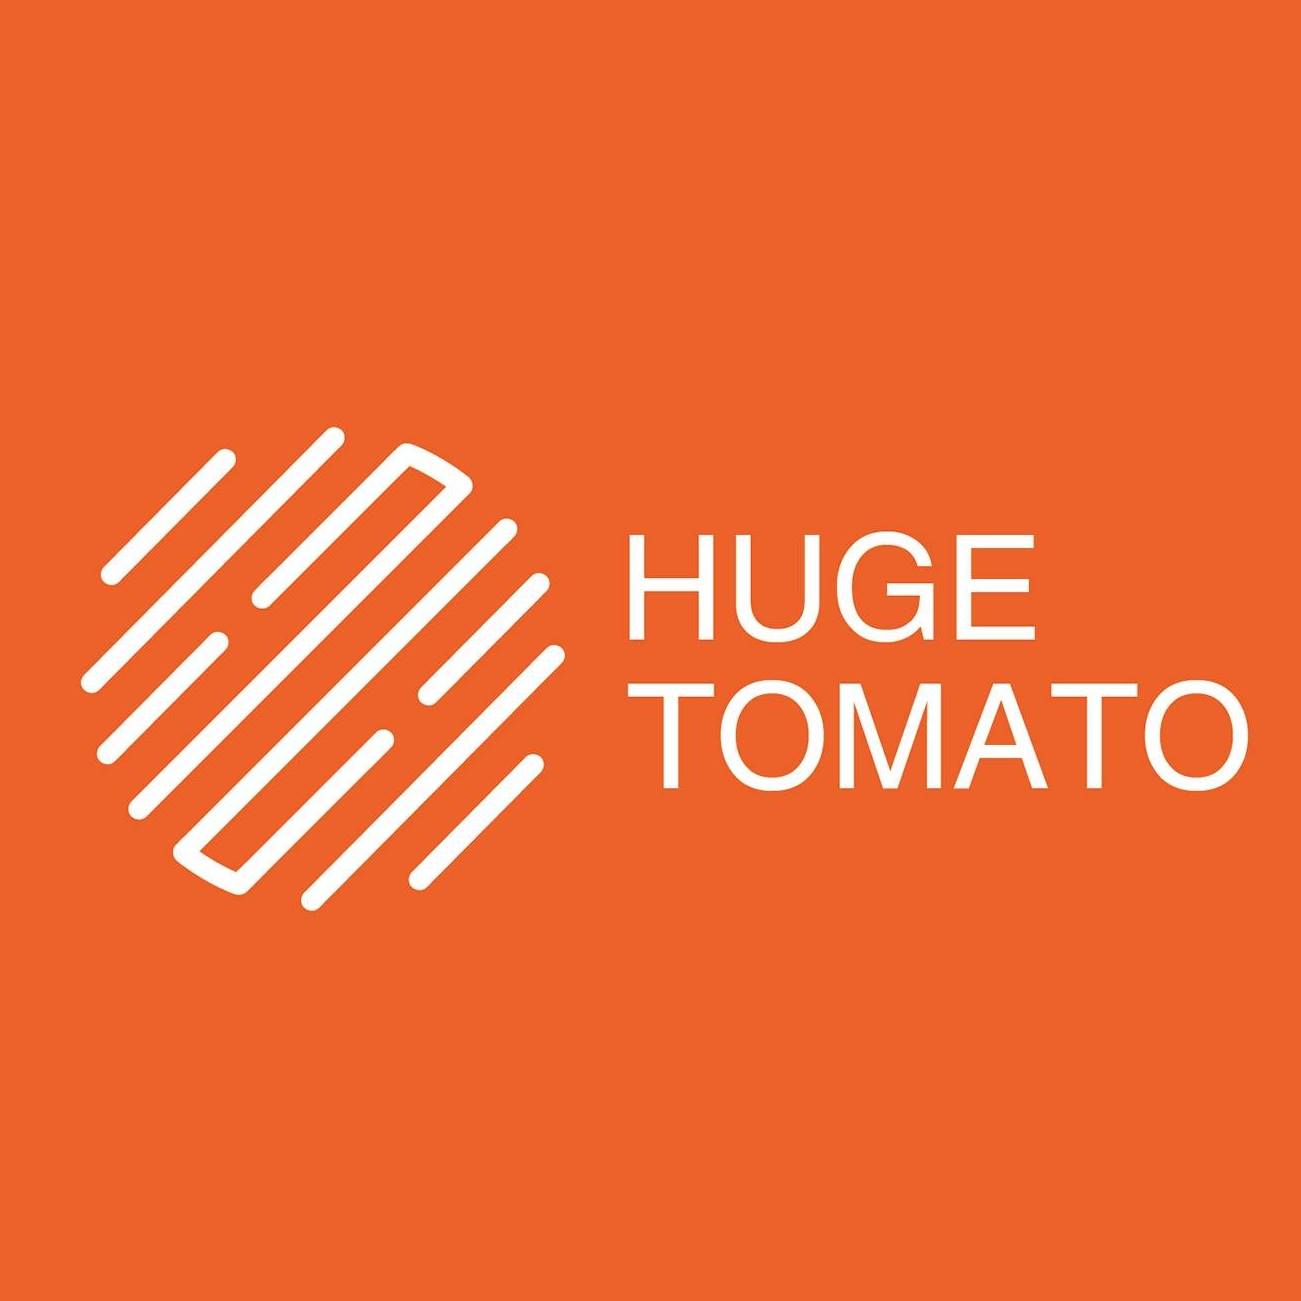 Huge Tomato